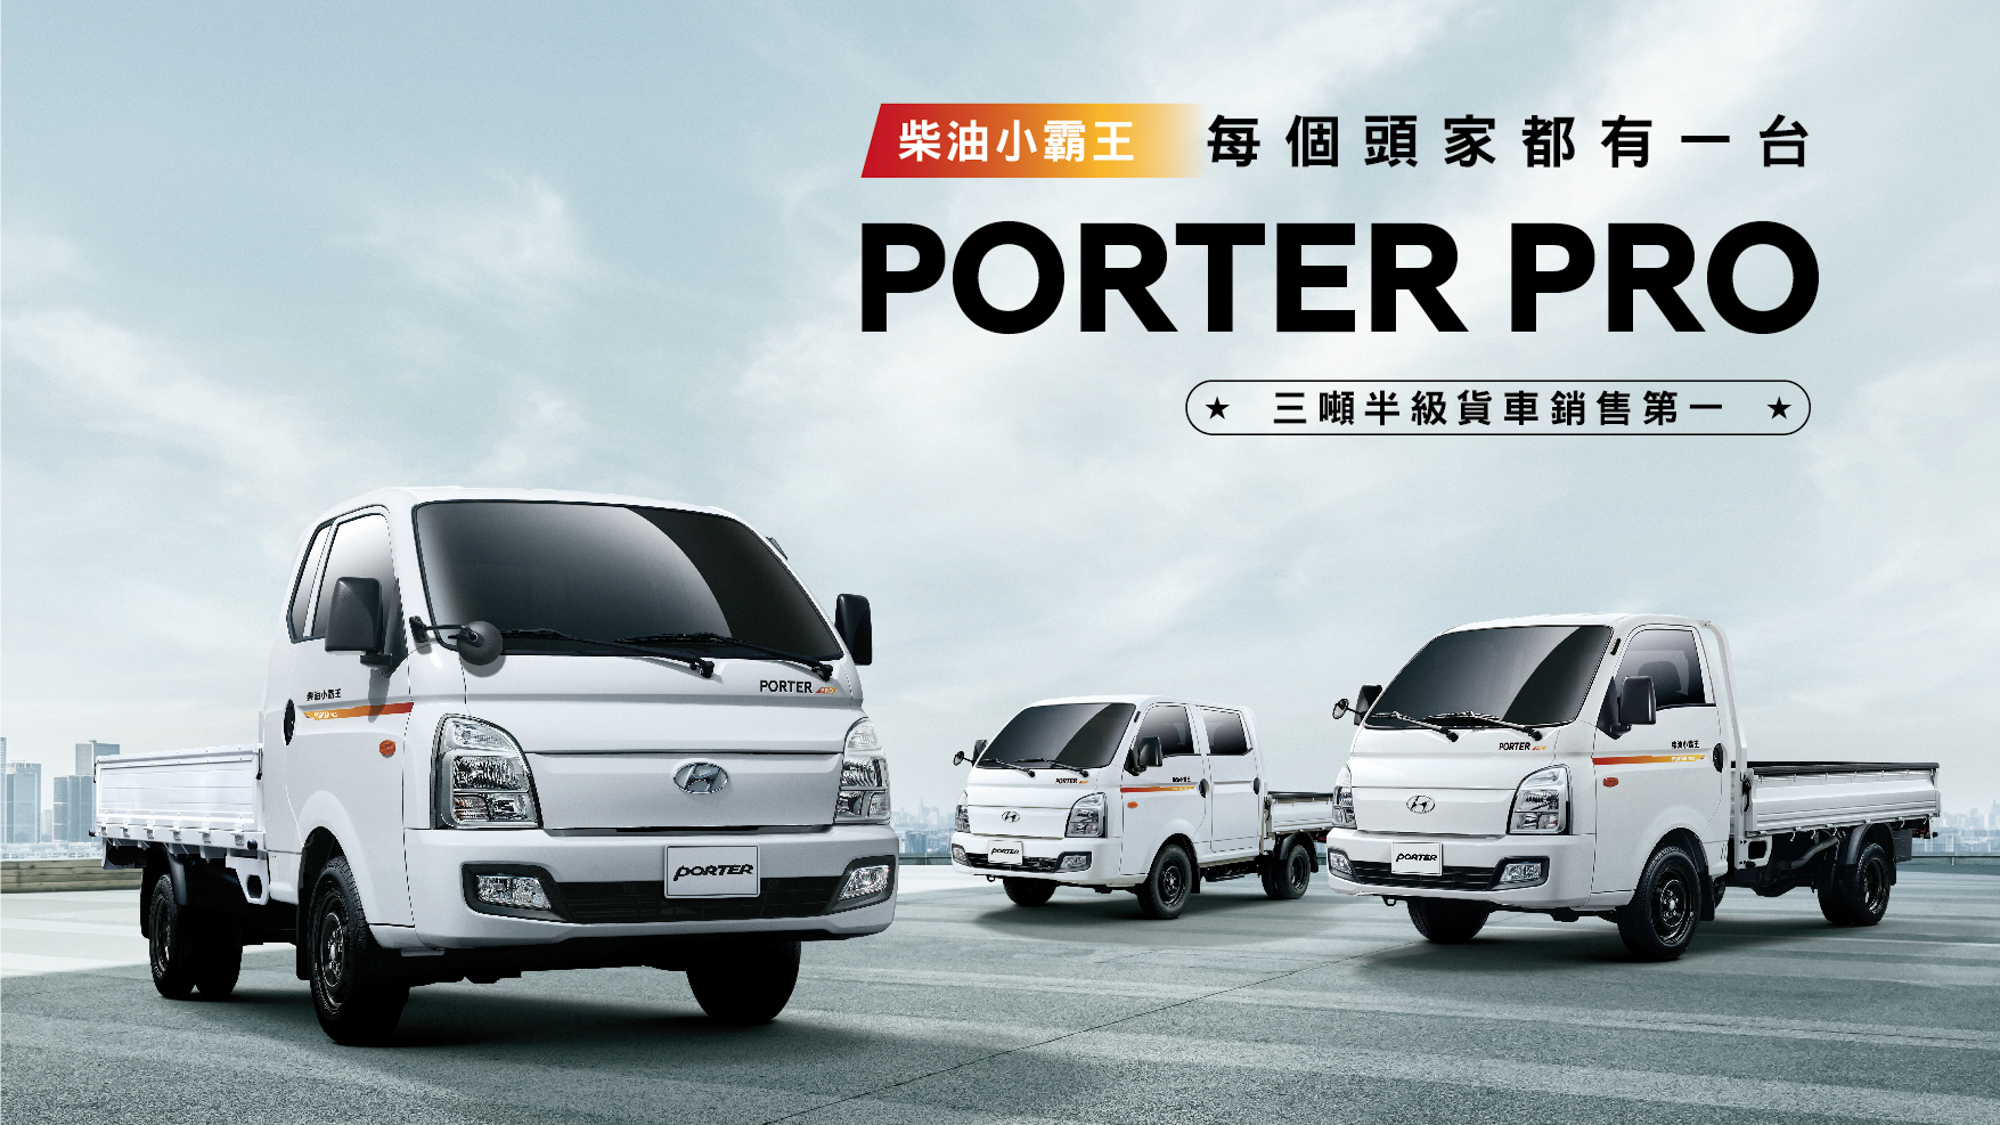 Hyundai Porter Pro 單月銷售創新高 單月 499 輛領牌新車